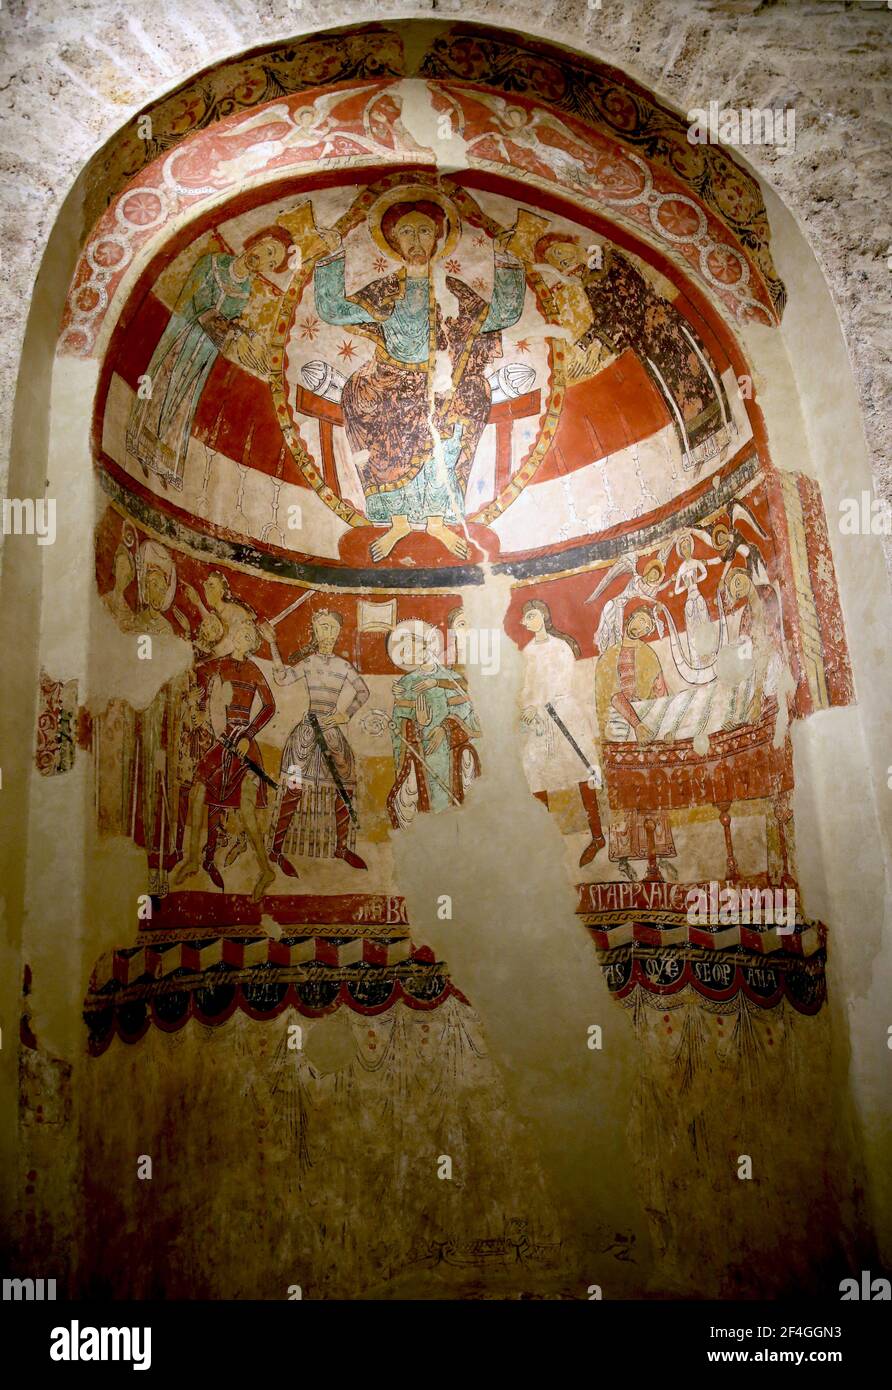 Martyrdom of Thomas Becket (1170) Fresco painting. Romanesque art, 12th- 13th centuries.  Church of St. Mary of Terrassa. Catalonia, Spain. Stock Photo